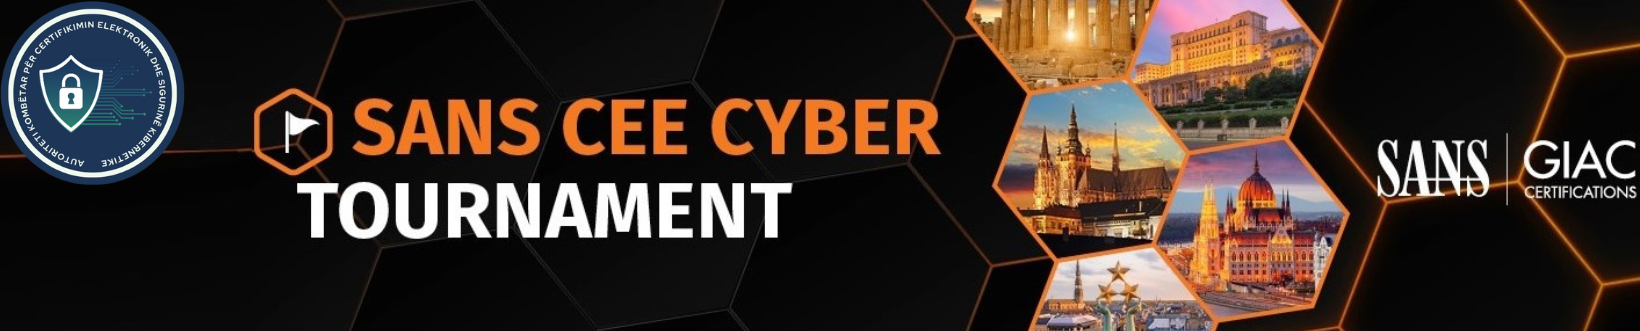 Virtual Cyber Tournament SANS CEE CYBER TOURNAMENT